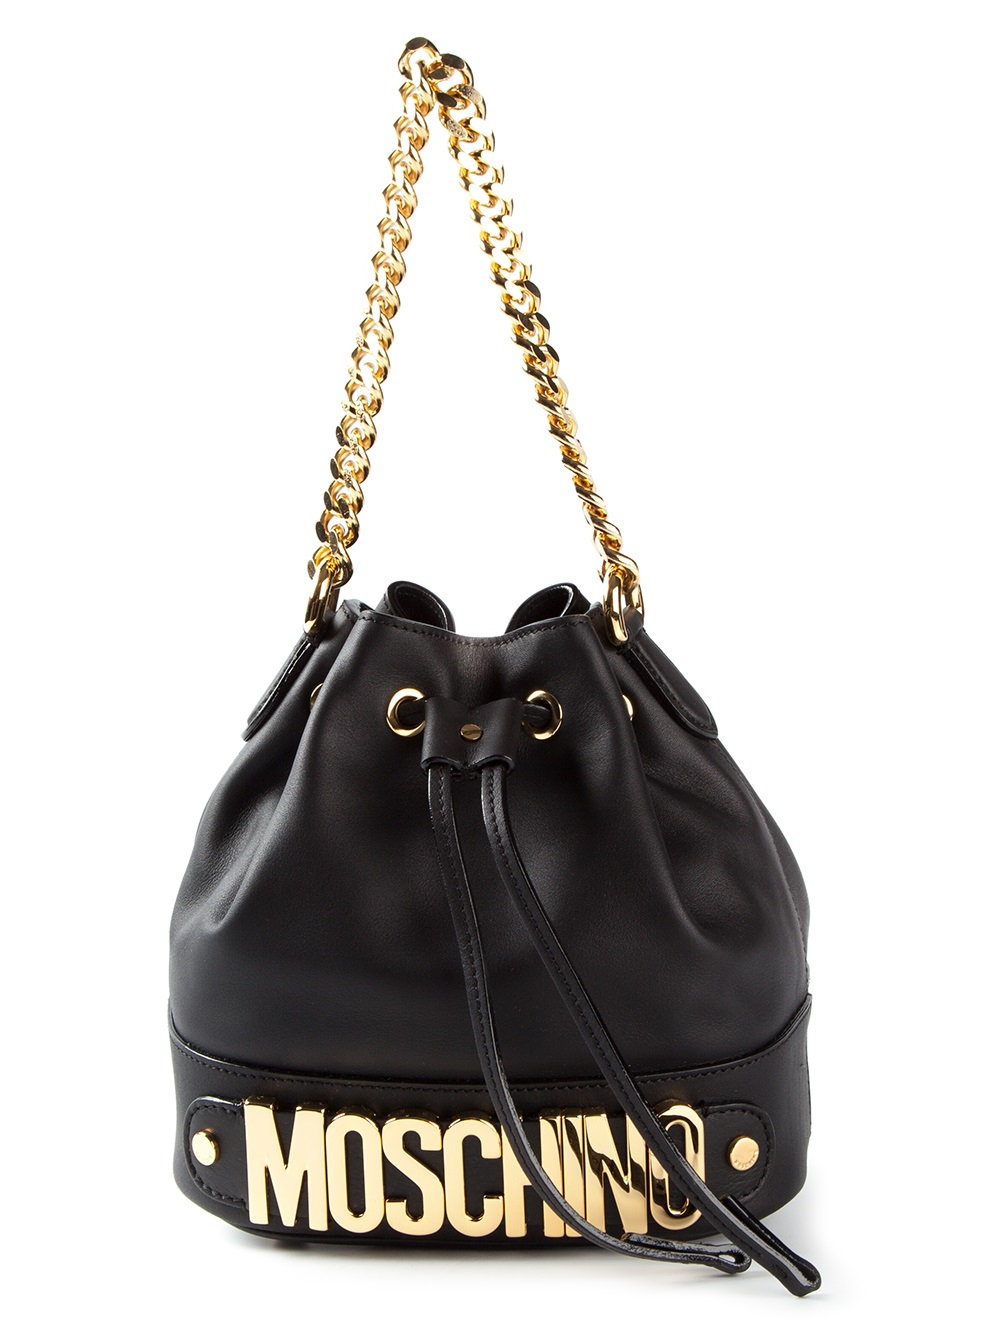 Lyst - Moschino Logo Duffle Bag in Black